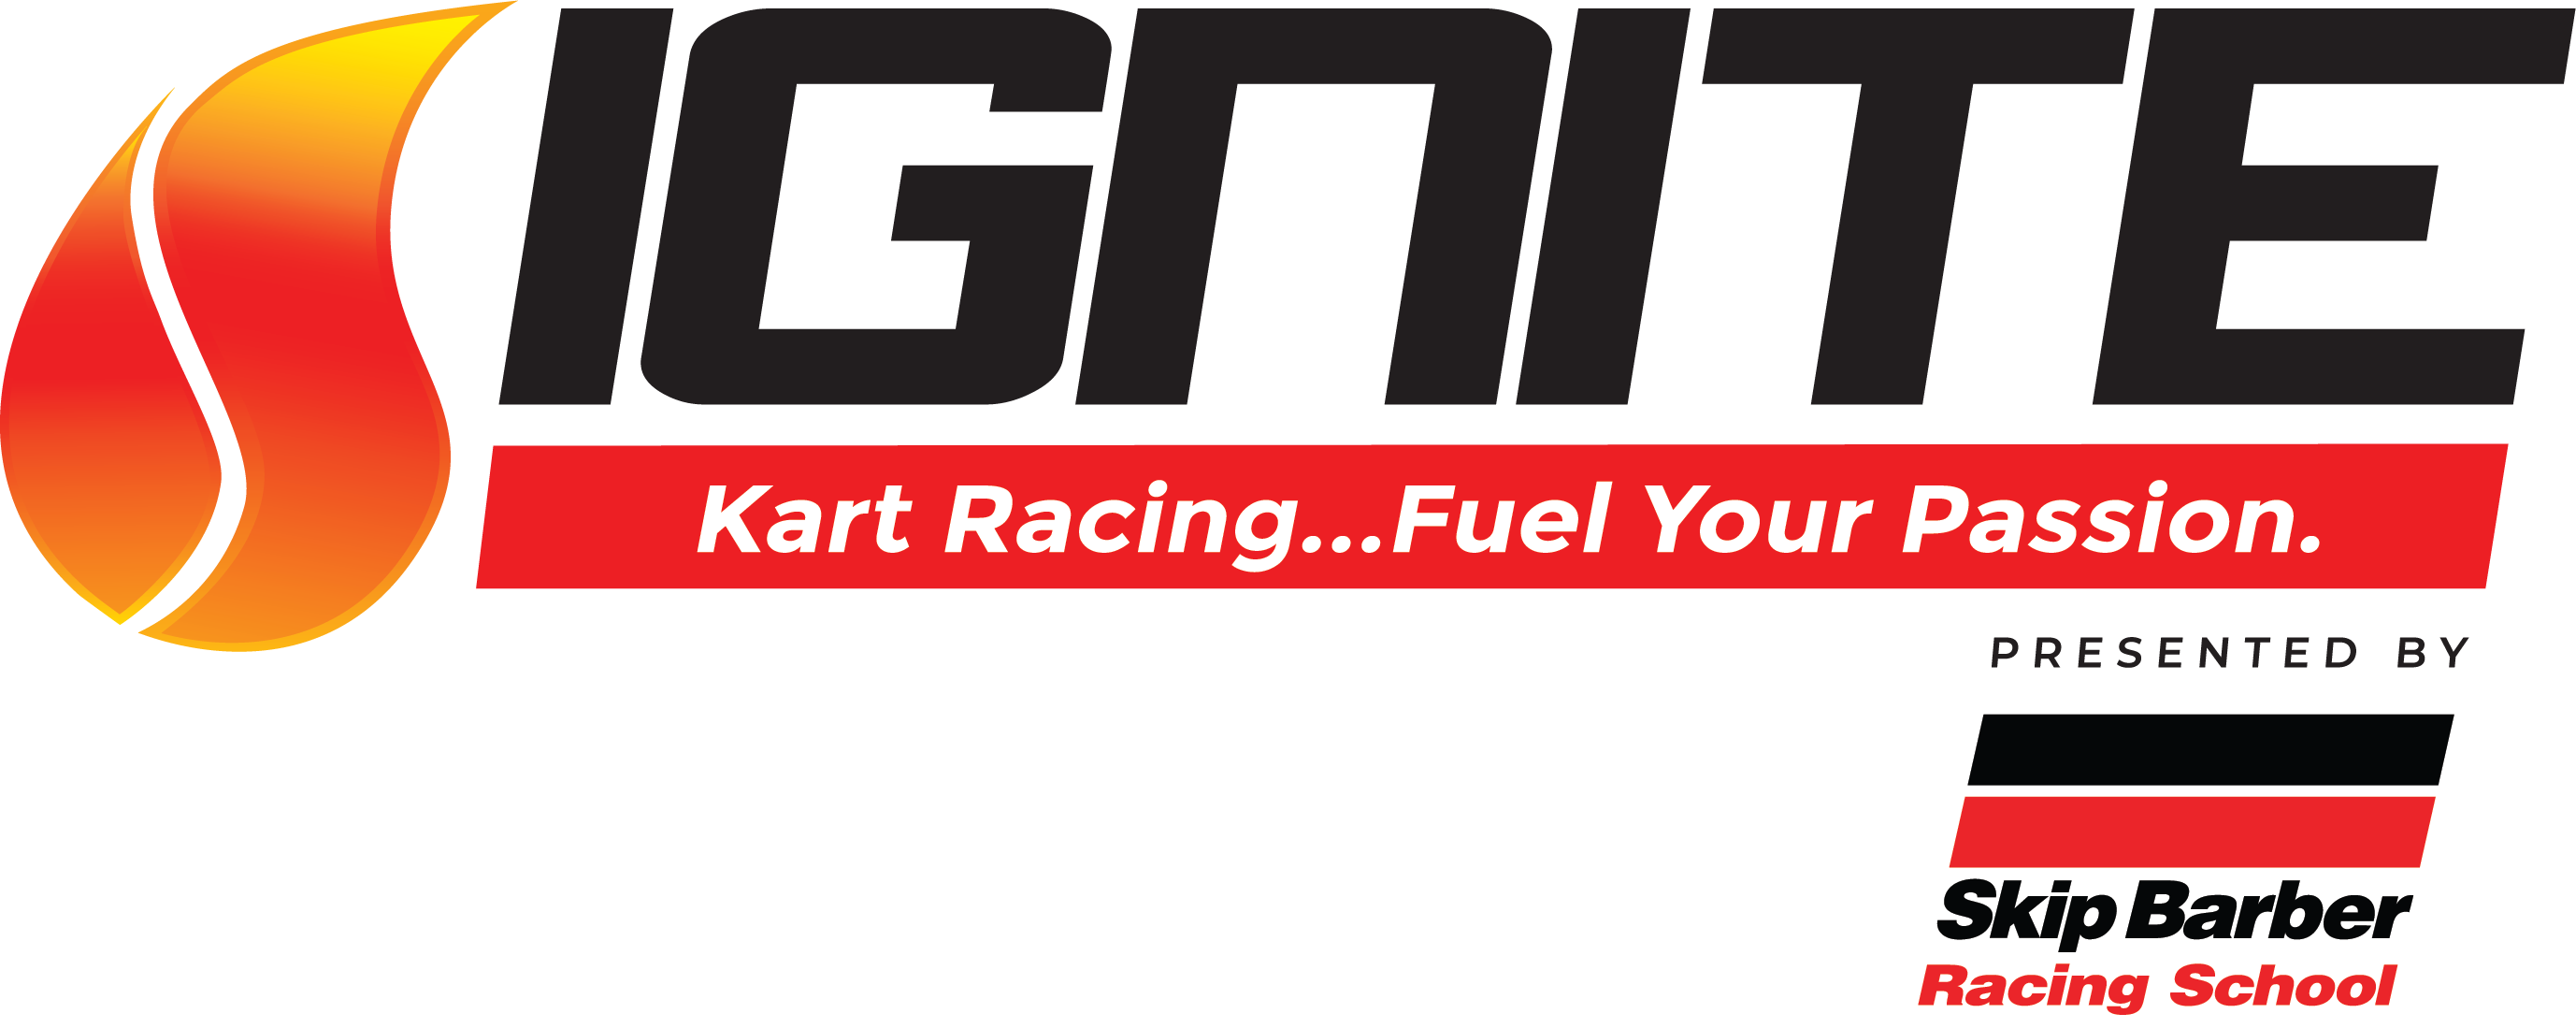 Ignite Karting – Spec Kart Racing